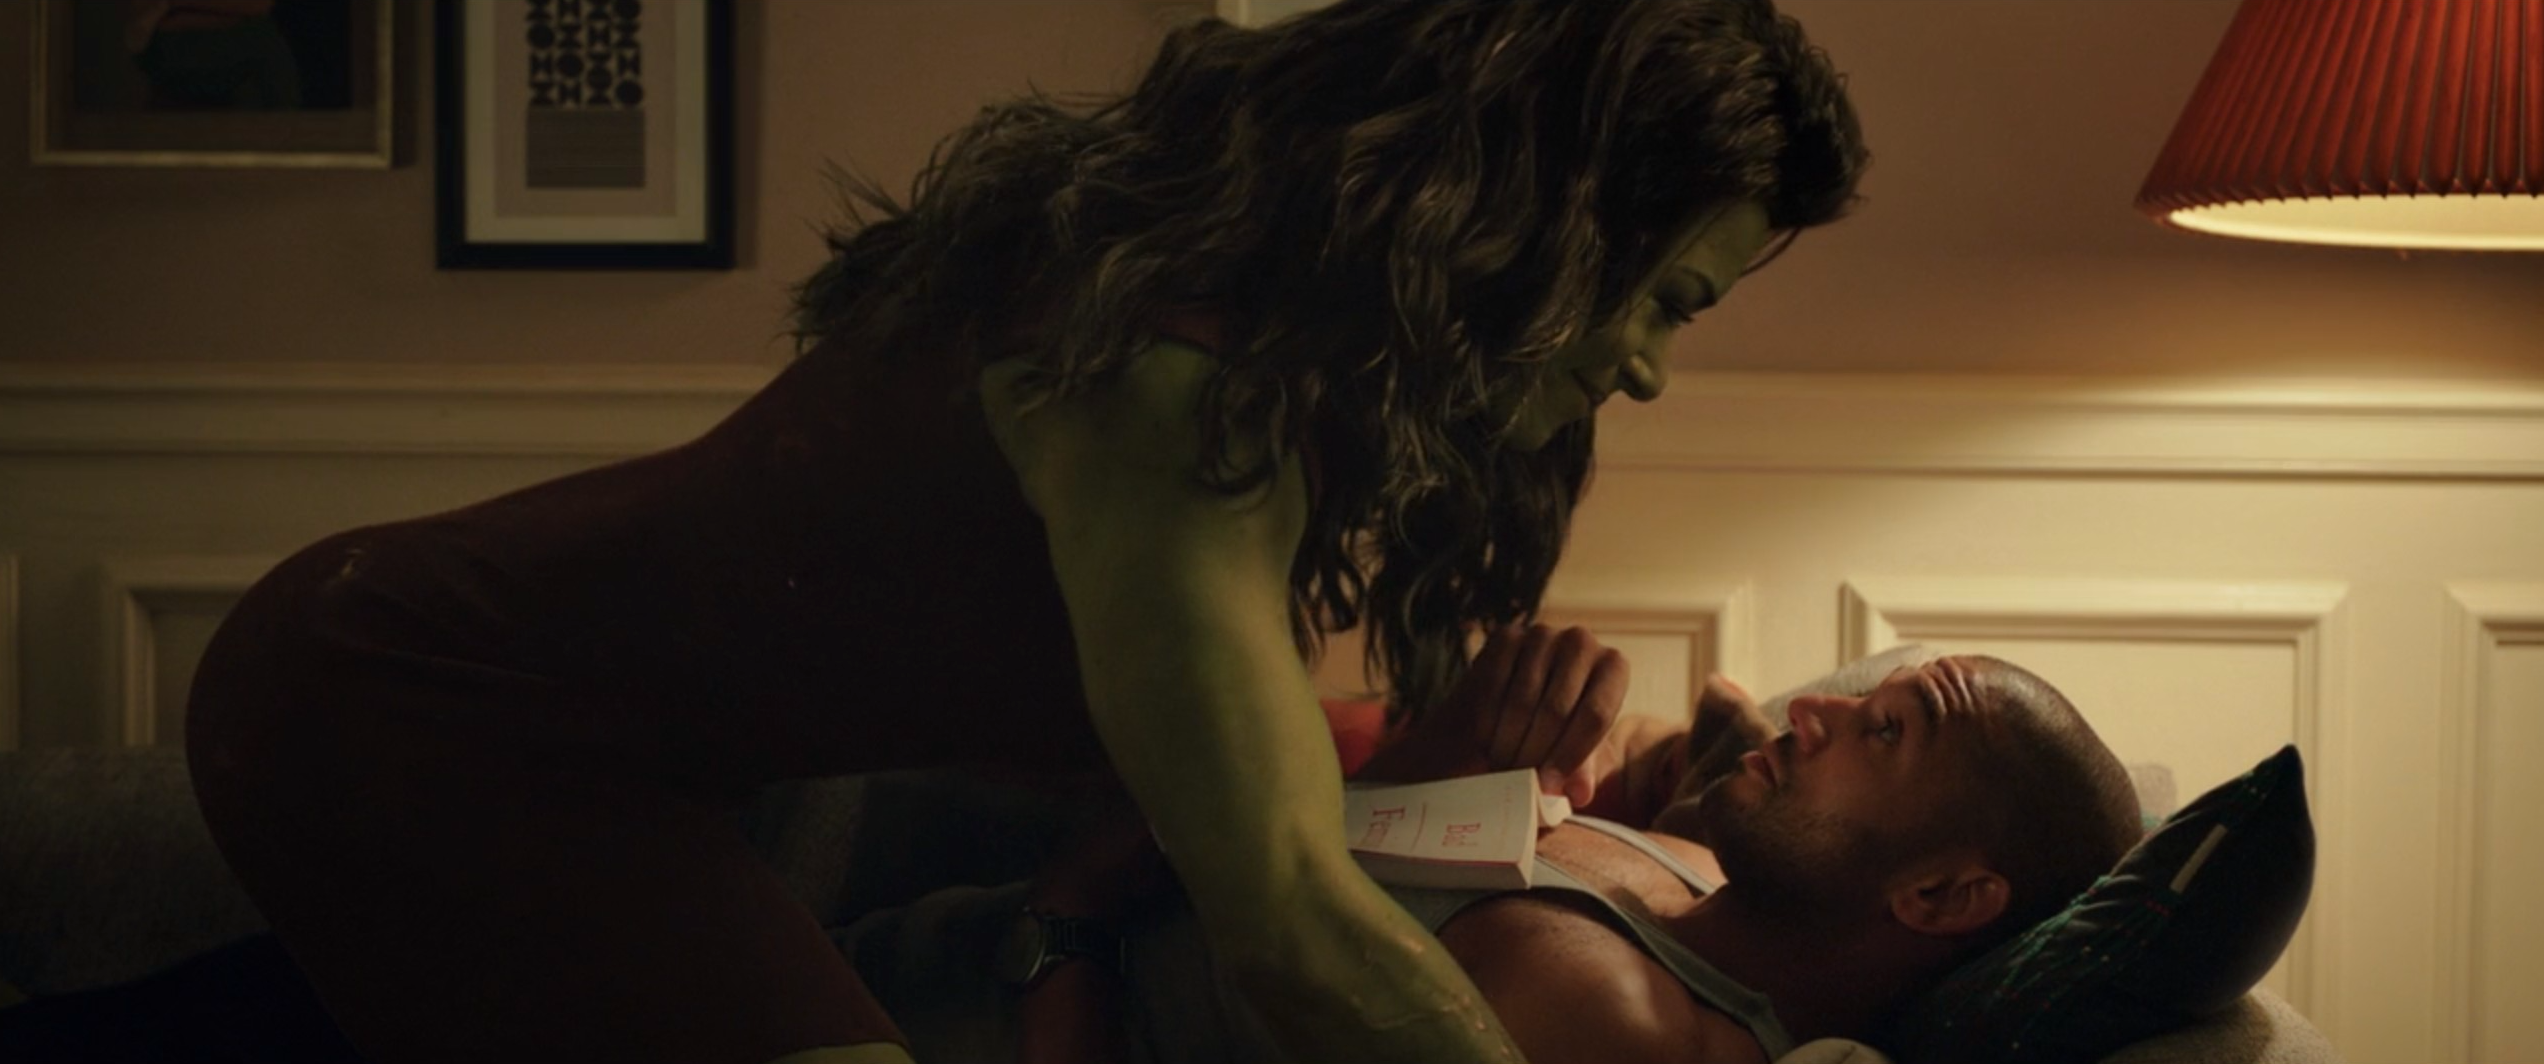 Crítica  Mulher-Hulk: Defensora de Heróis – 1X04: Is This Not Real Magic?  - Plano Crítico